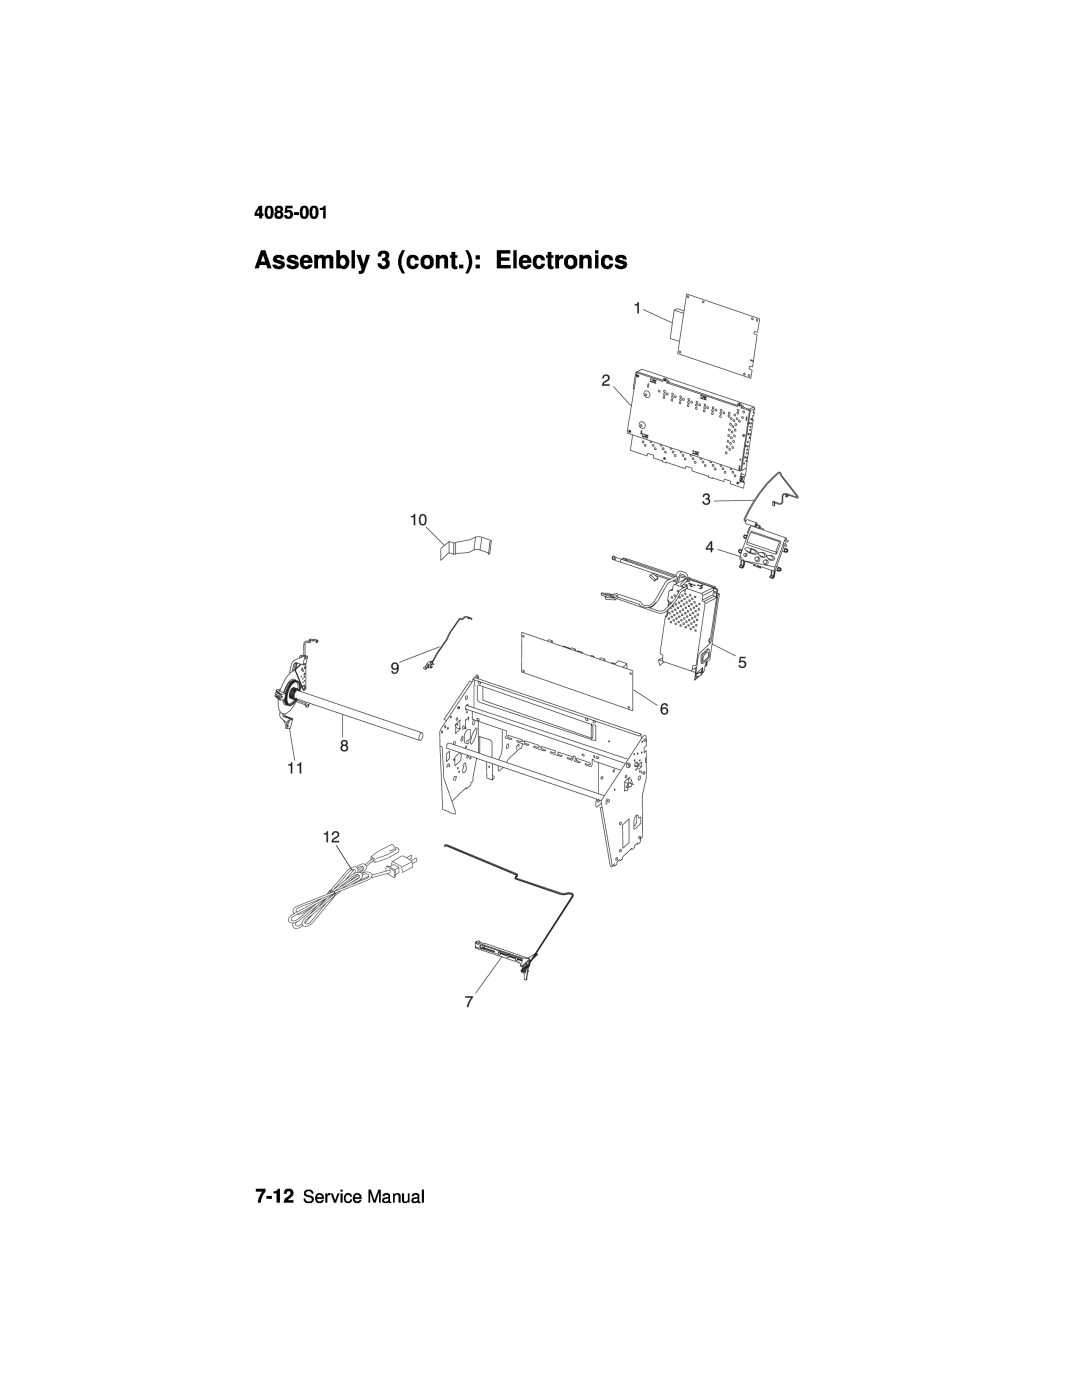 Lexmark J110, Printer manual Assembly 3 cont.: Electronics, 4085-001, Service Manual 